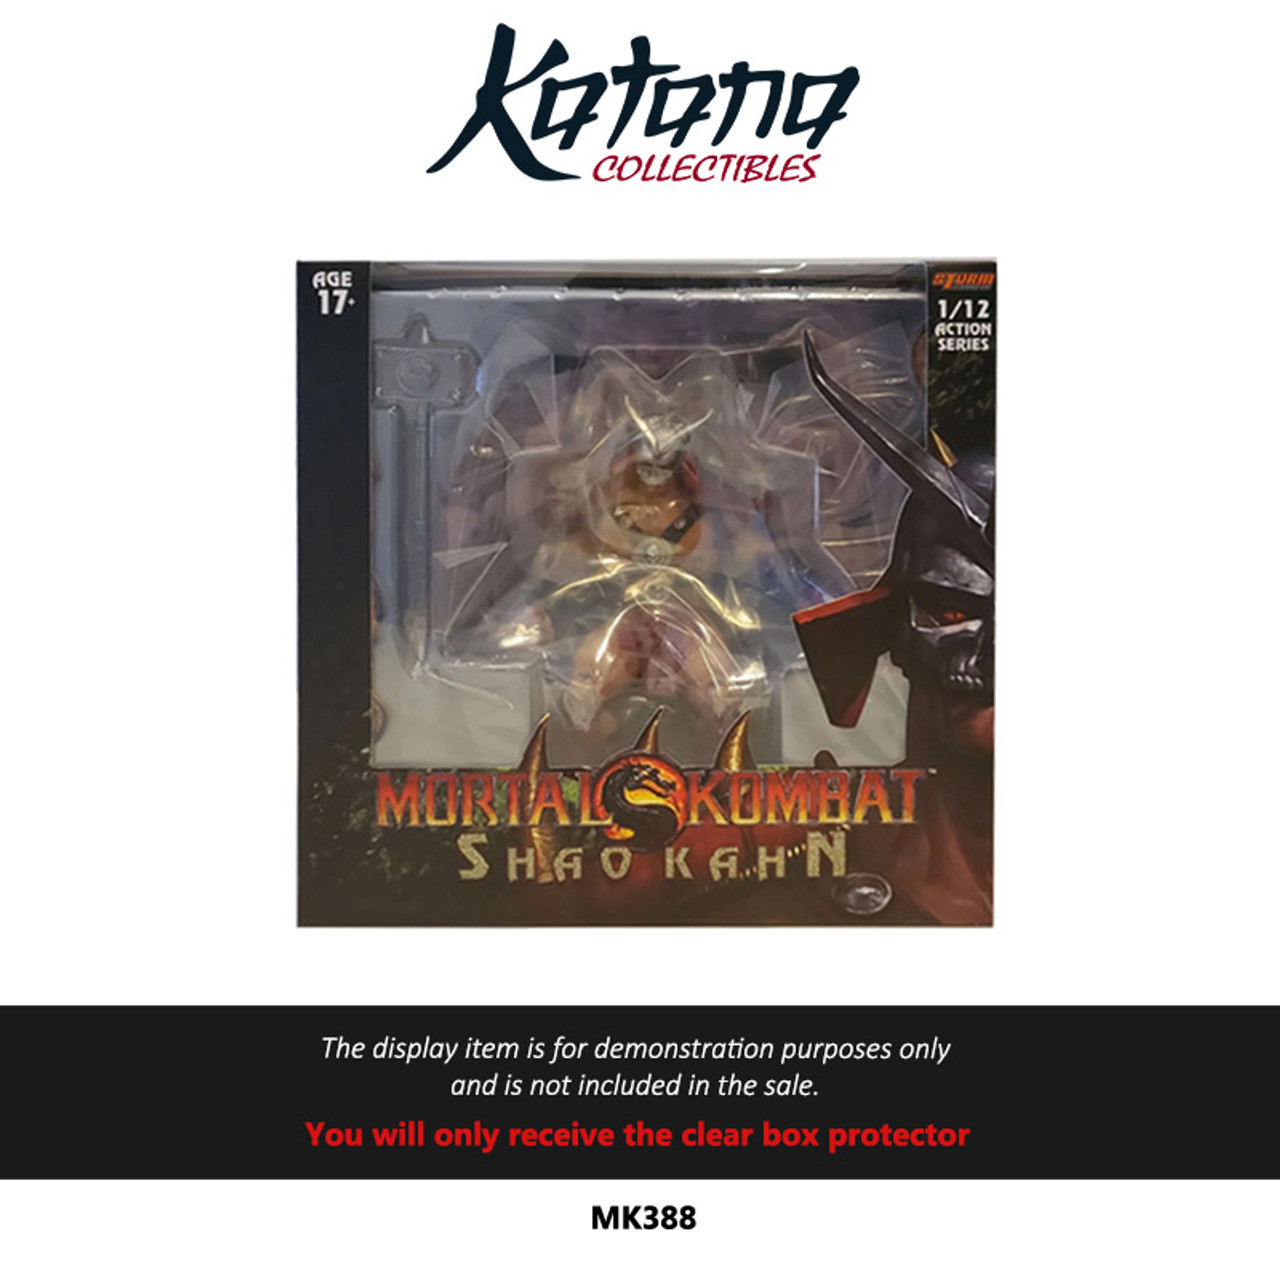 Katana Collectibles Protector For Storm Mortal Kombat Shao Kahn Figure